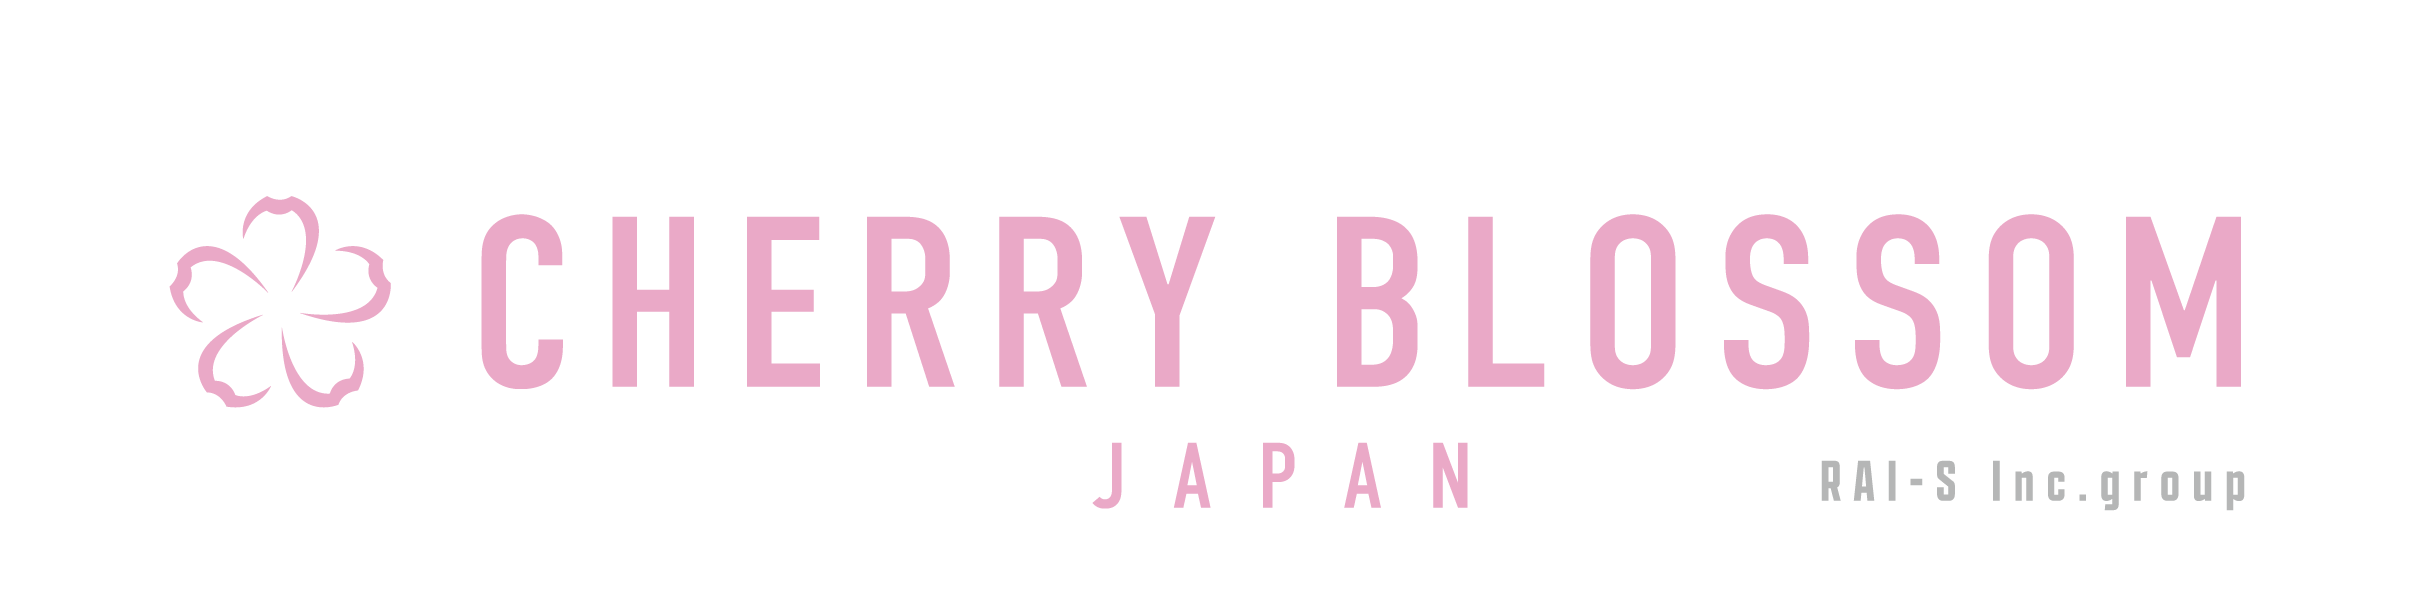 CHERRY BLOSSOM  JAPAN　(RAI-S INC.group)